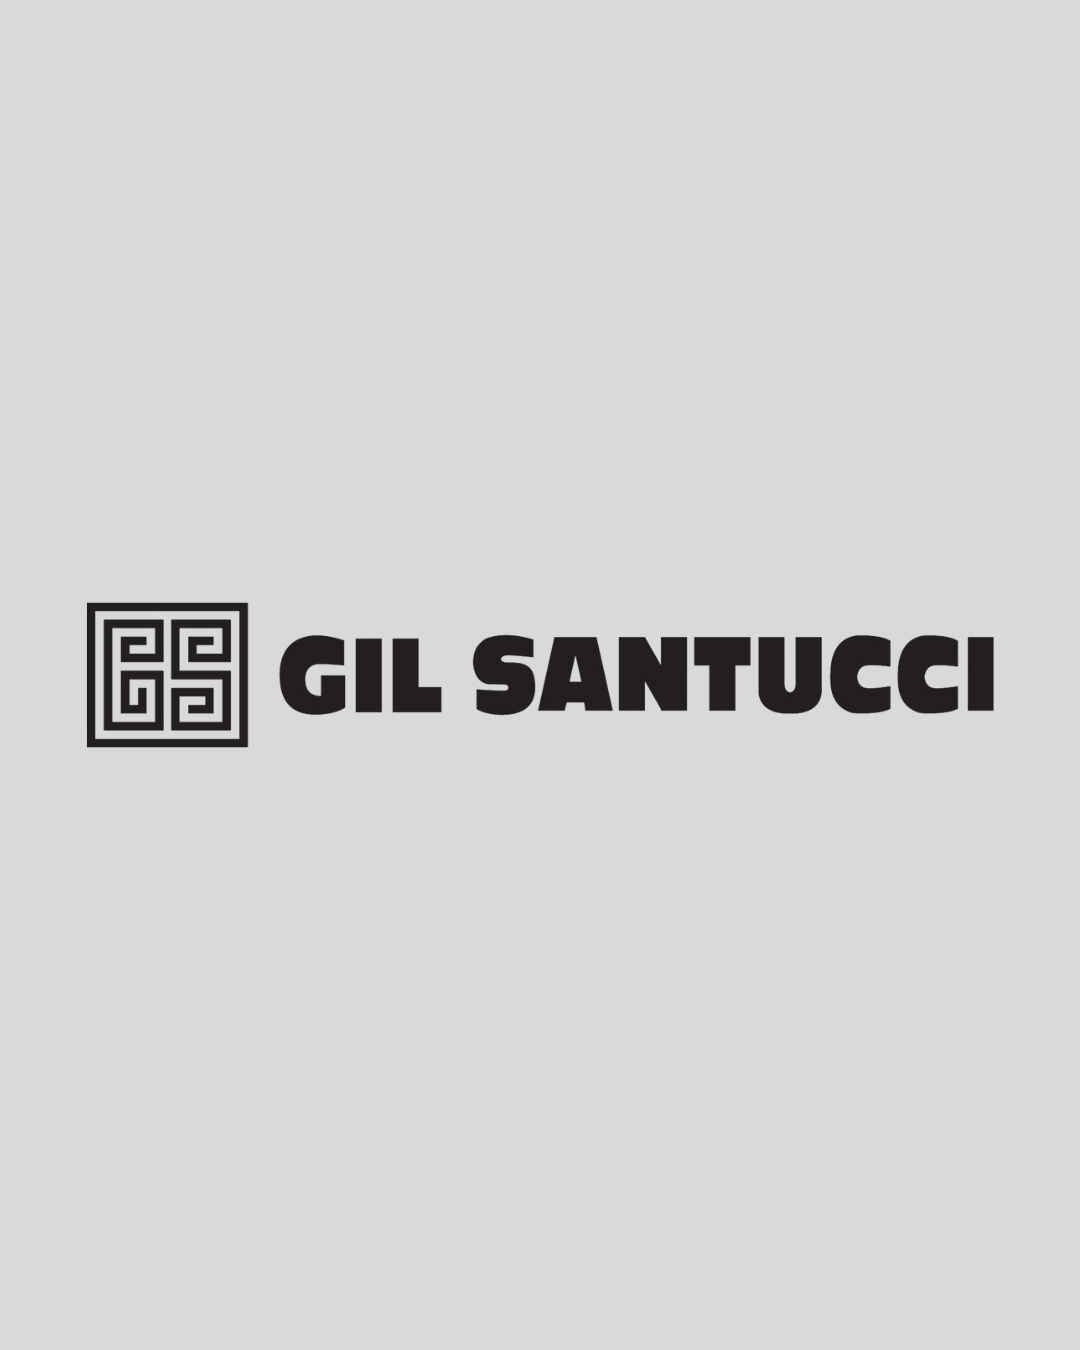 Gil Santucci